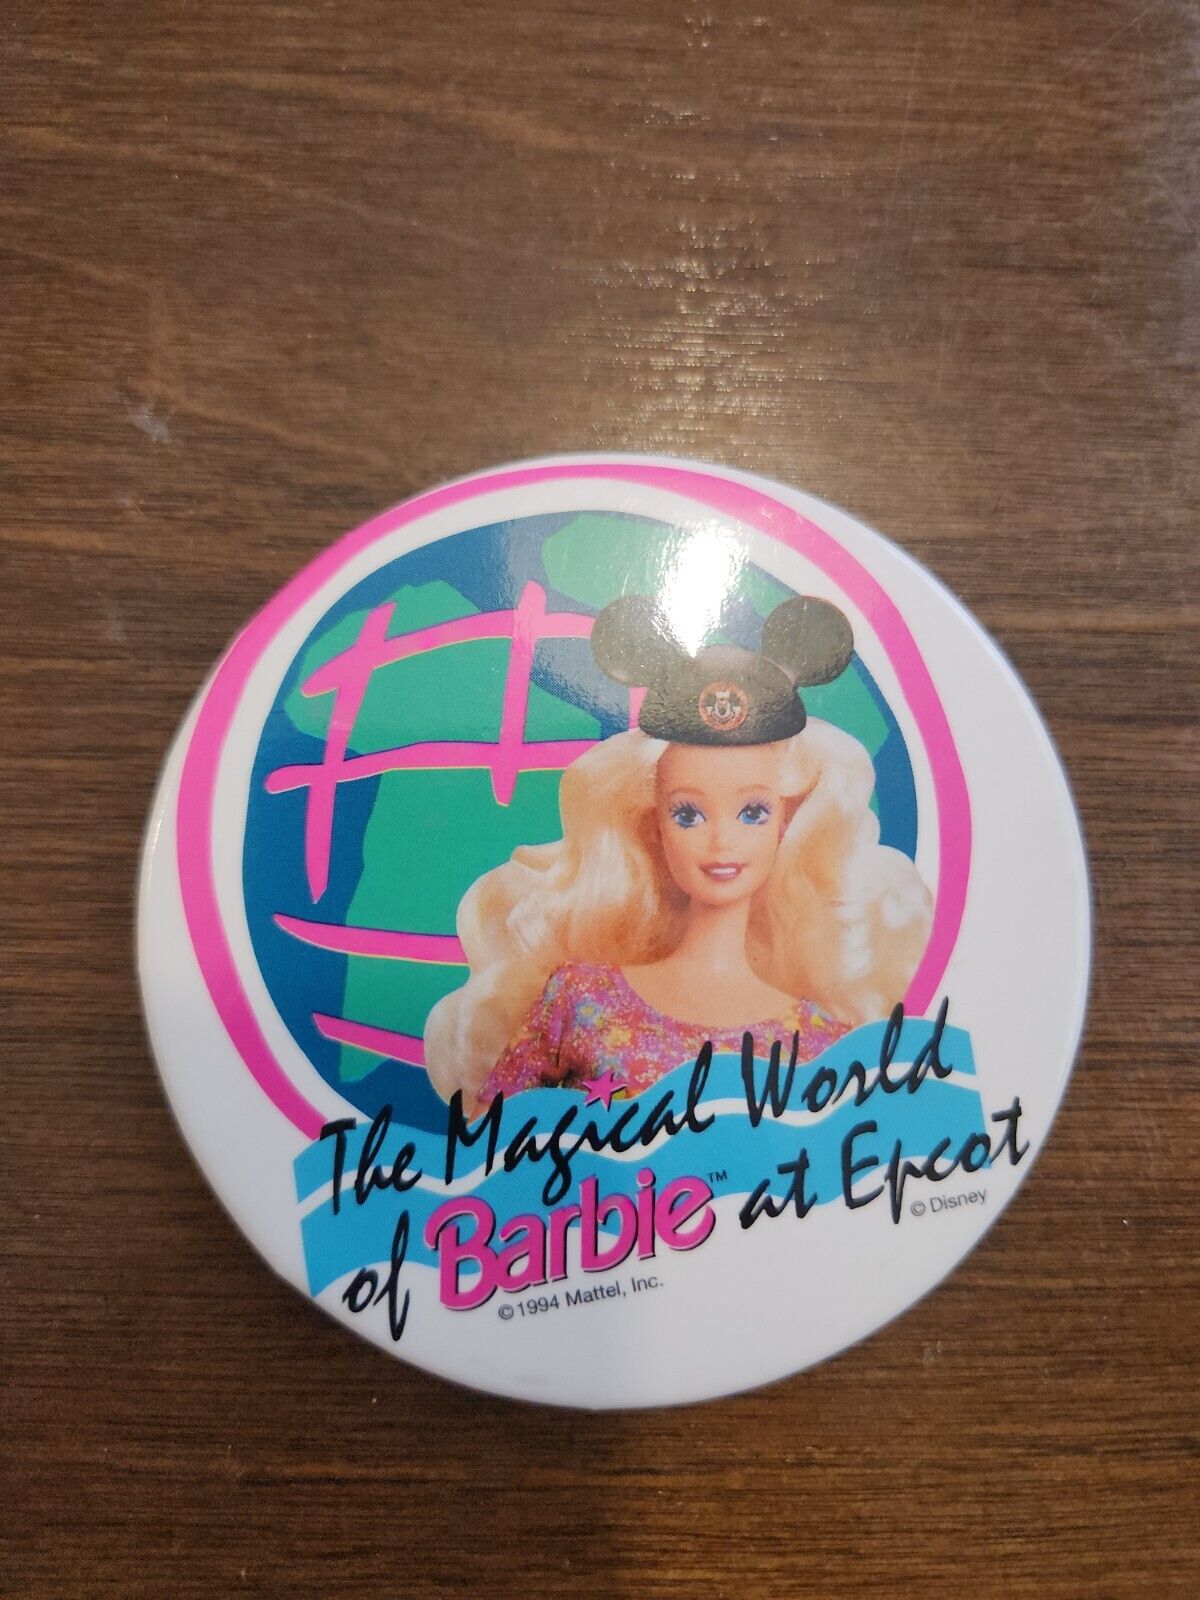 Magical World of Barbie Disney 1994  Pin Button Mickey Ears Mattel